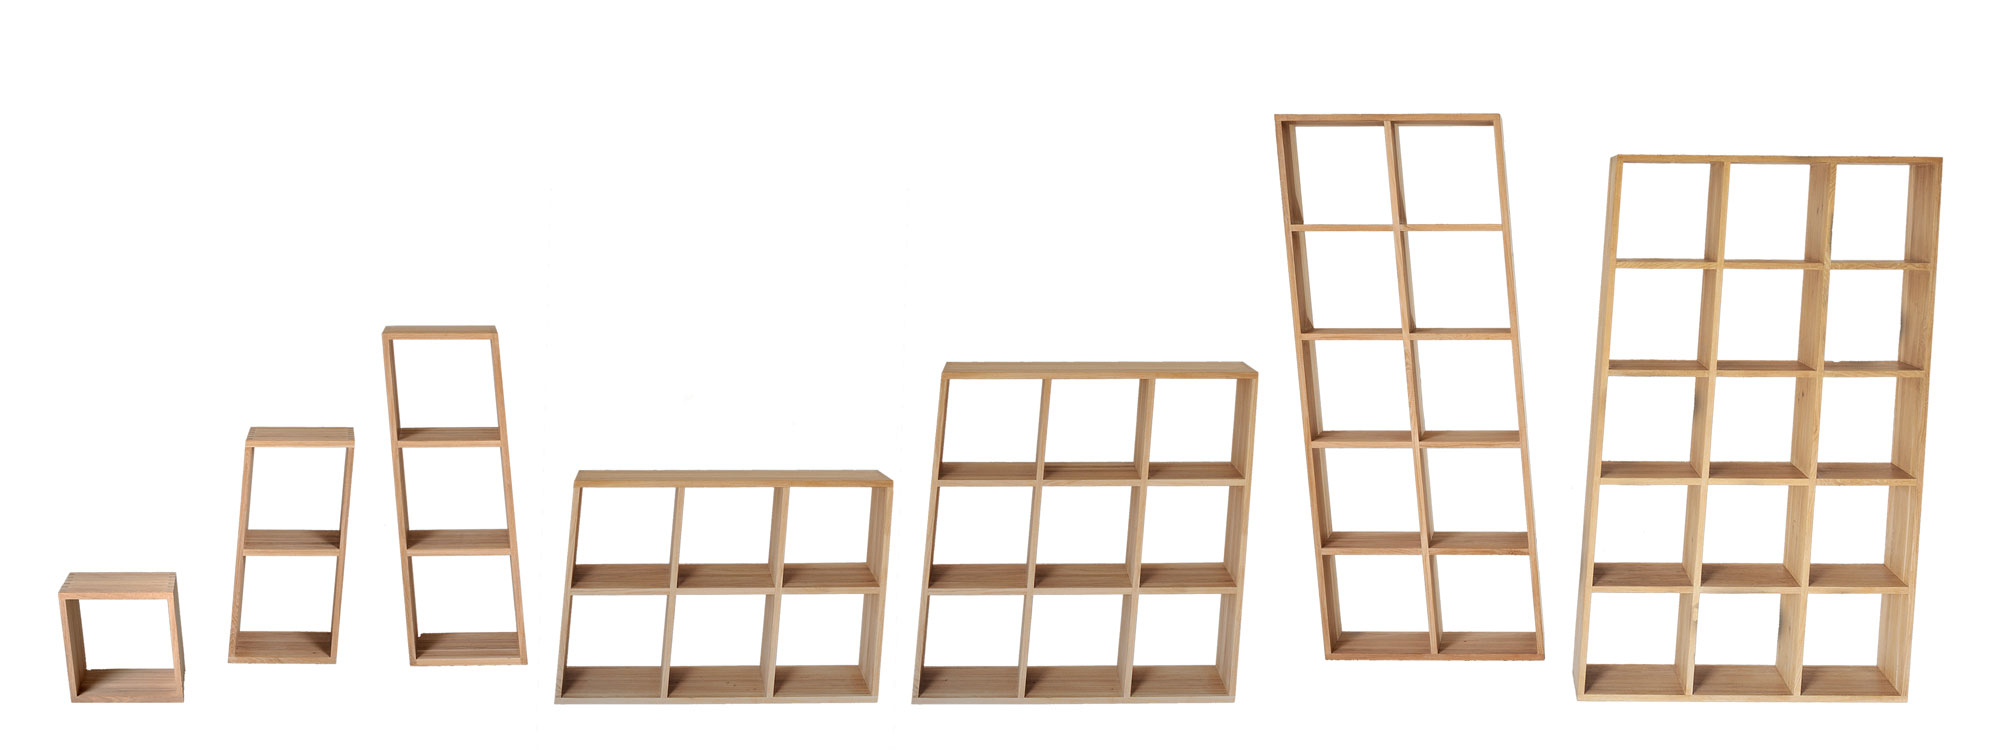 Wooden Designer Shelf PISA cut custom made in solid wood by vitamin design